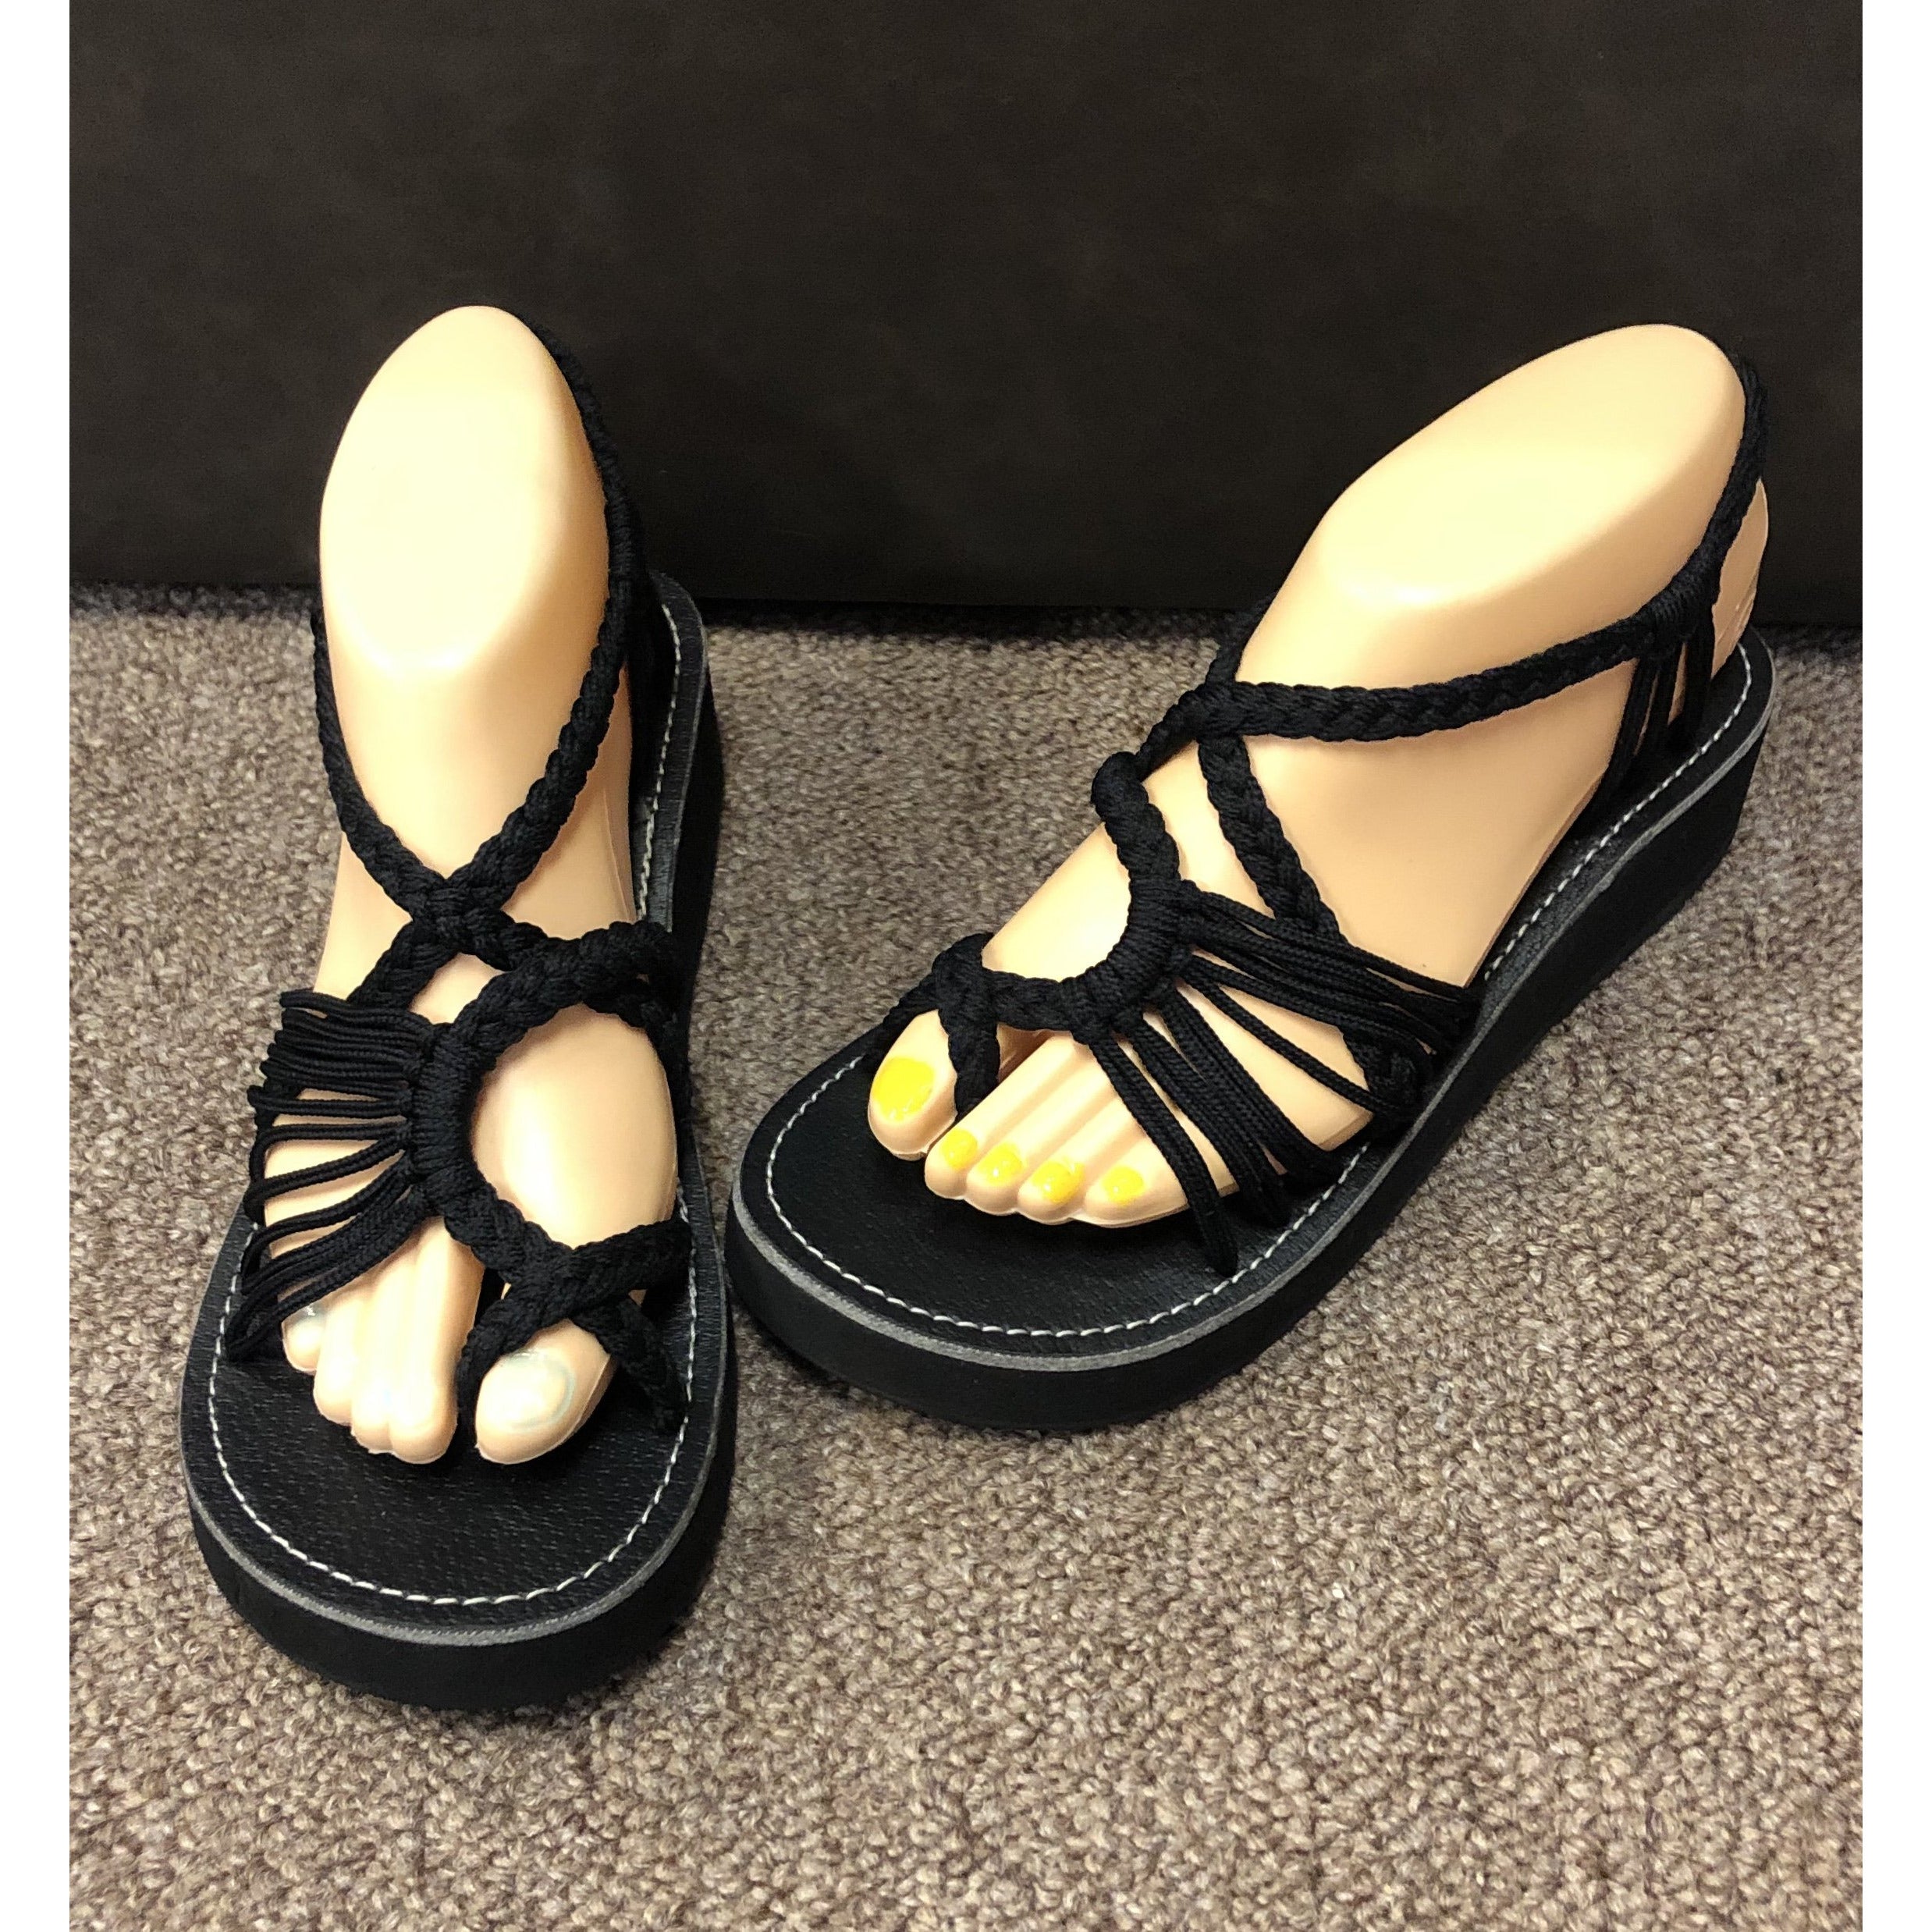 Shoes - Braided Sandal BLACK/XTOE - KULTURAL VIBEZ